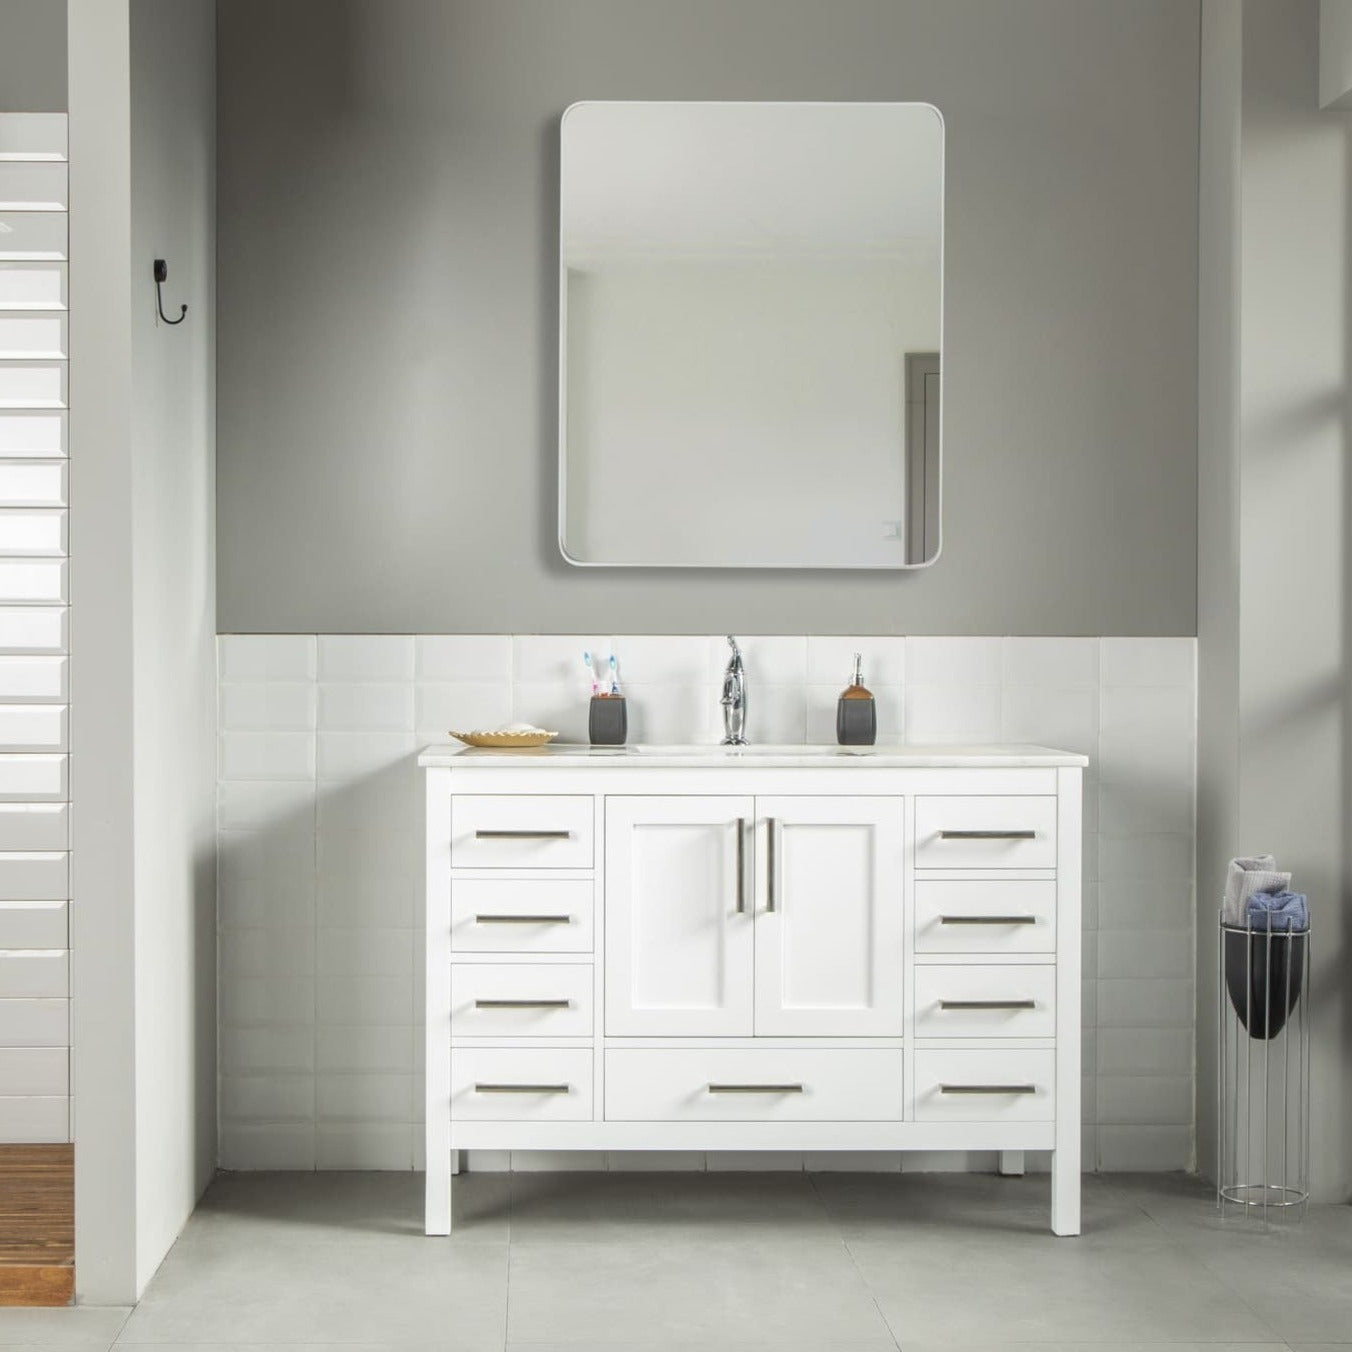 Ahley Bathroom Vanity Homelero 48"  #size_48"  #color_white #hardware_brushed nickel